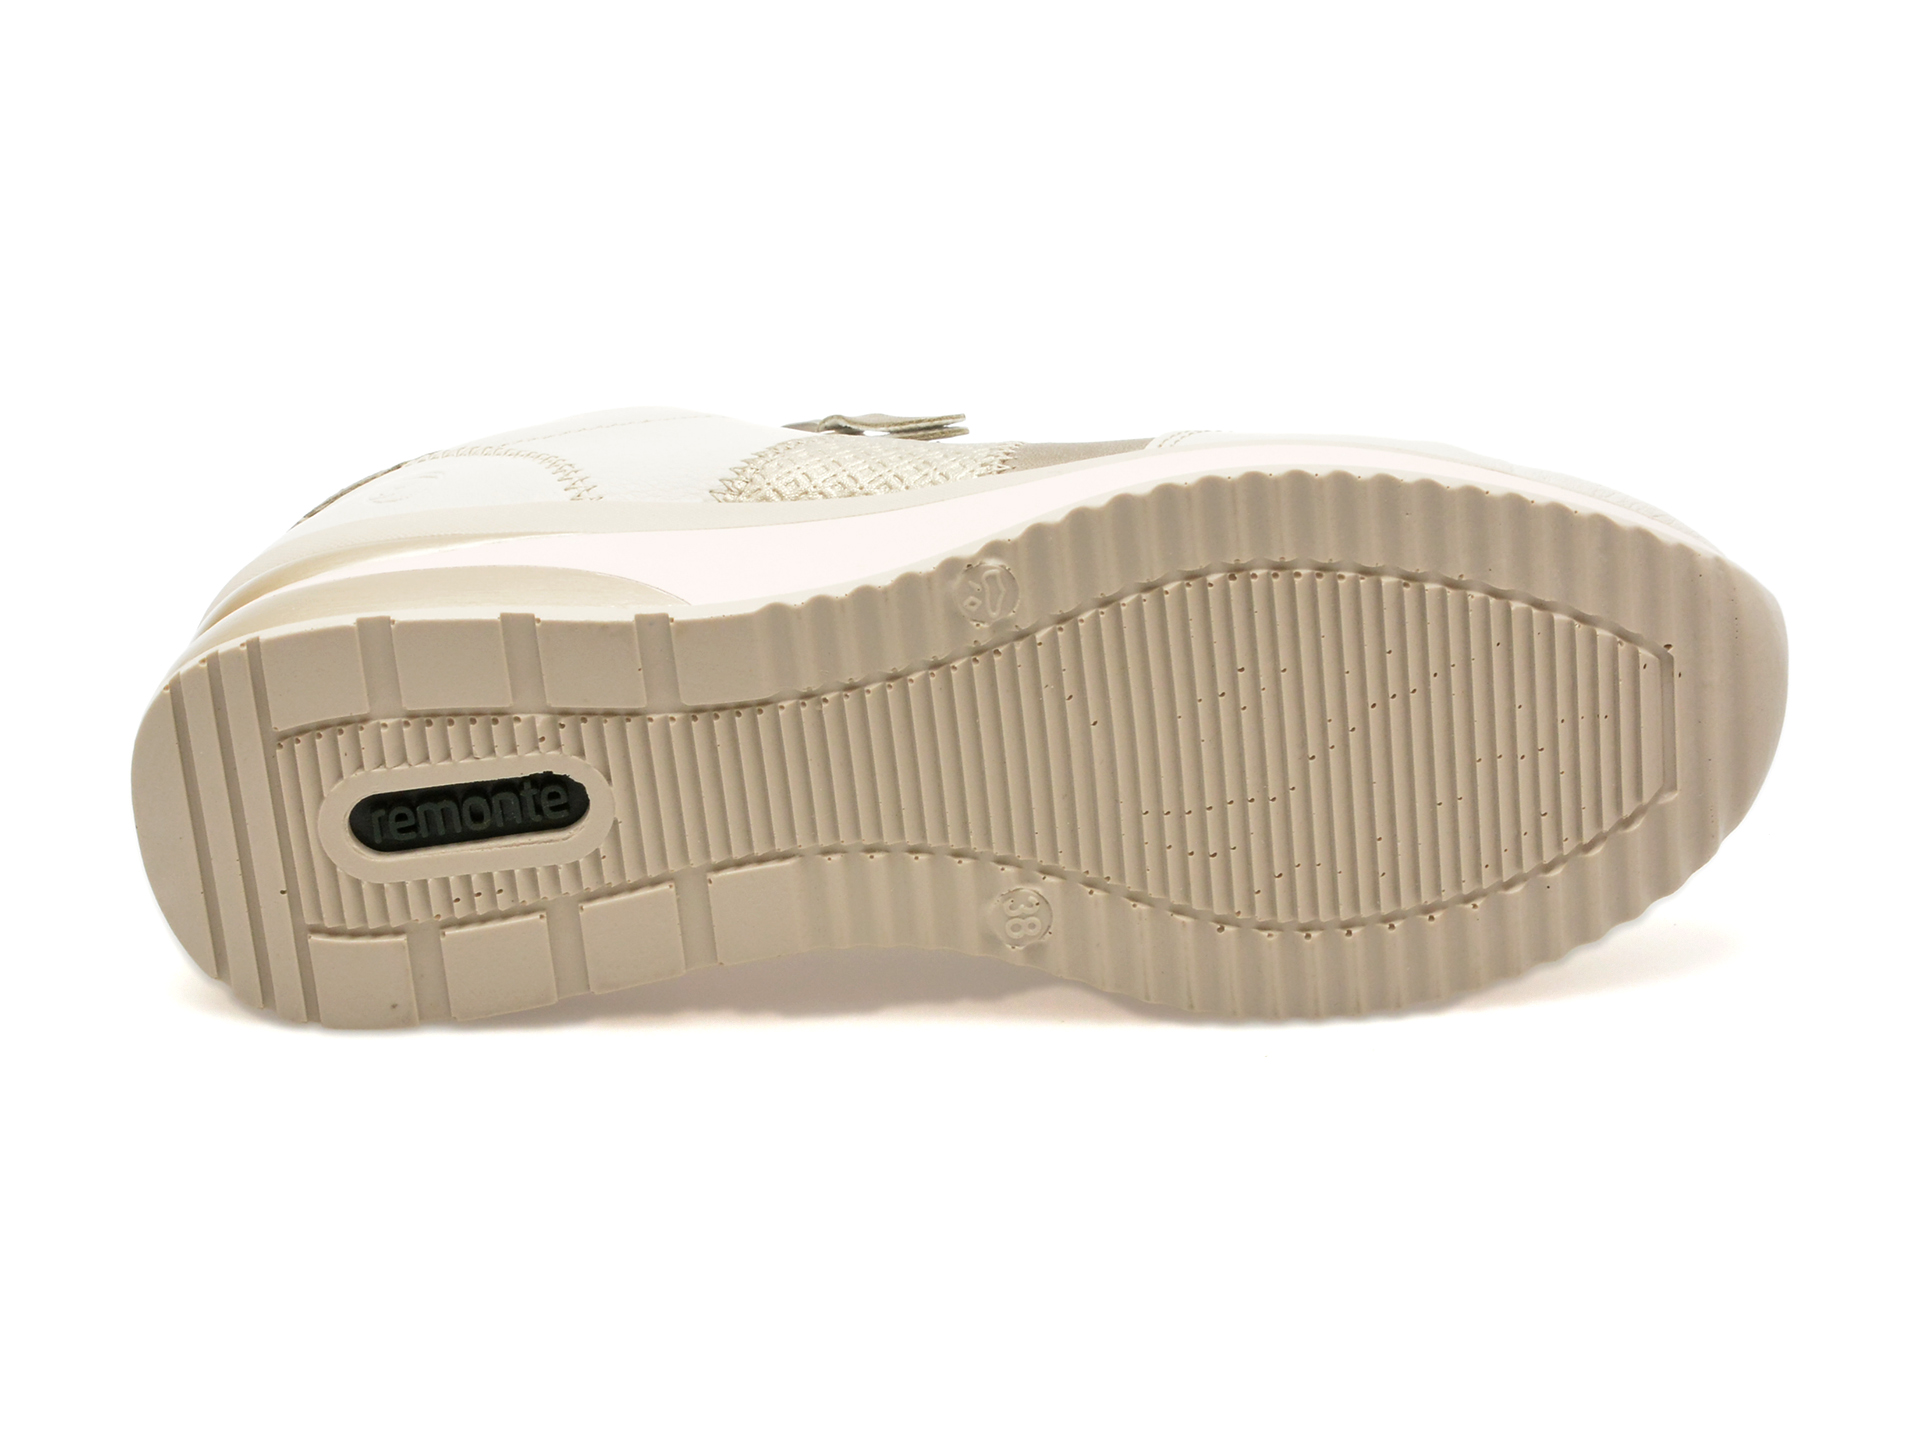 Pantofi Casual REMONTE albi, D2414, din piele naturala